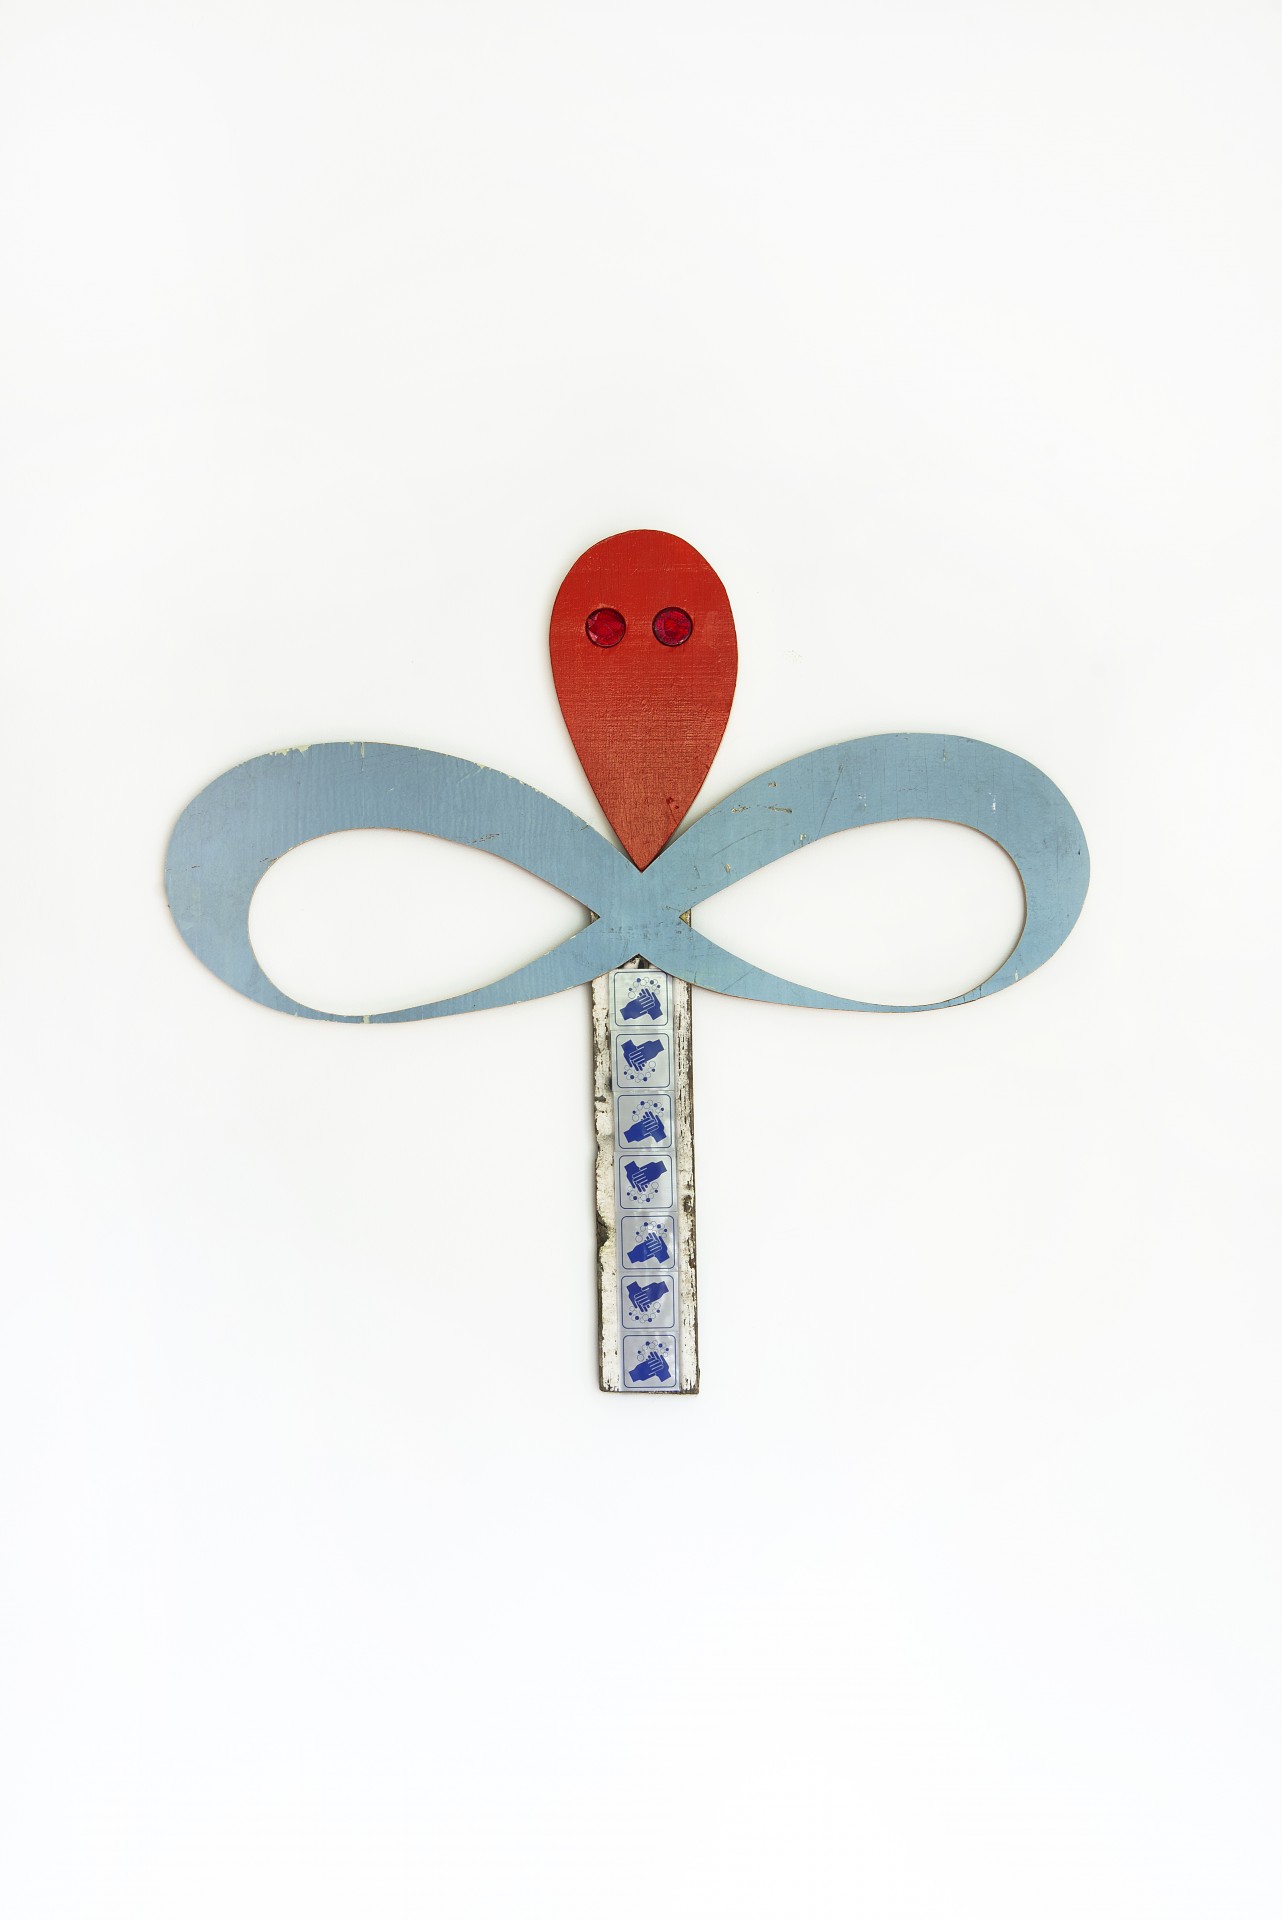 Michael Lazarus, *red & blue*, 2013. Paint, wood, adhesive lettering, plastic reflectors 